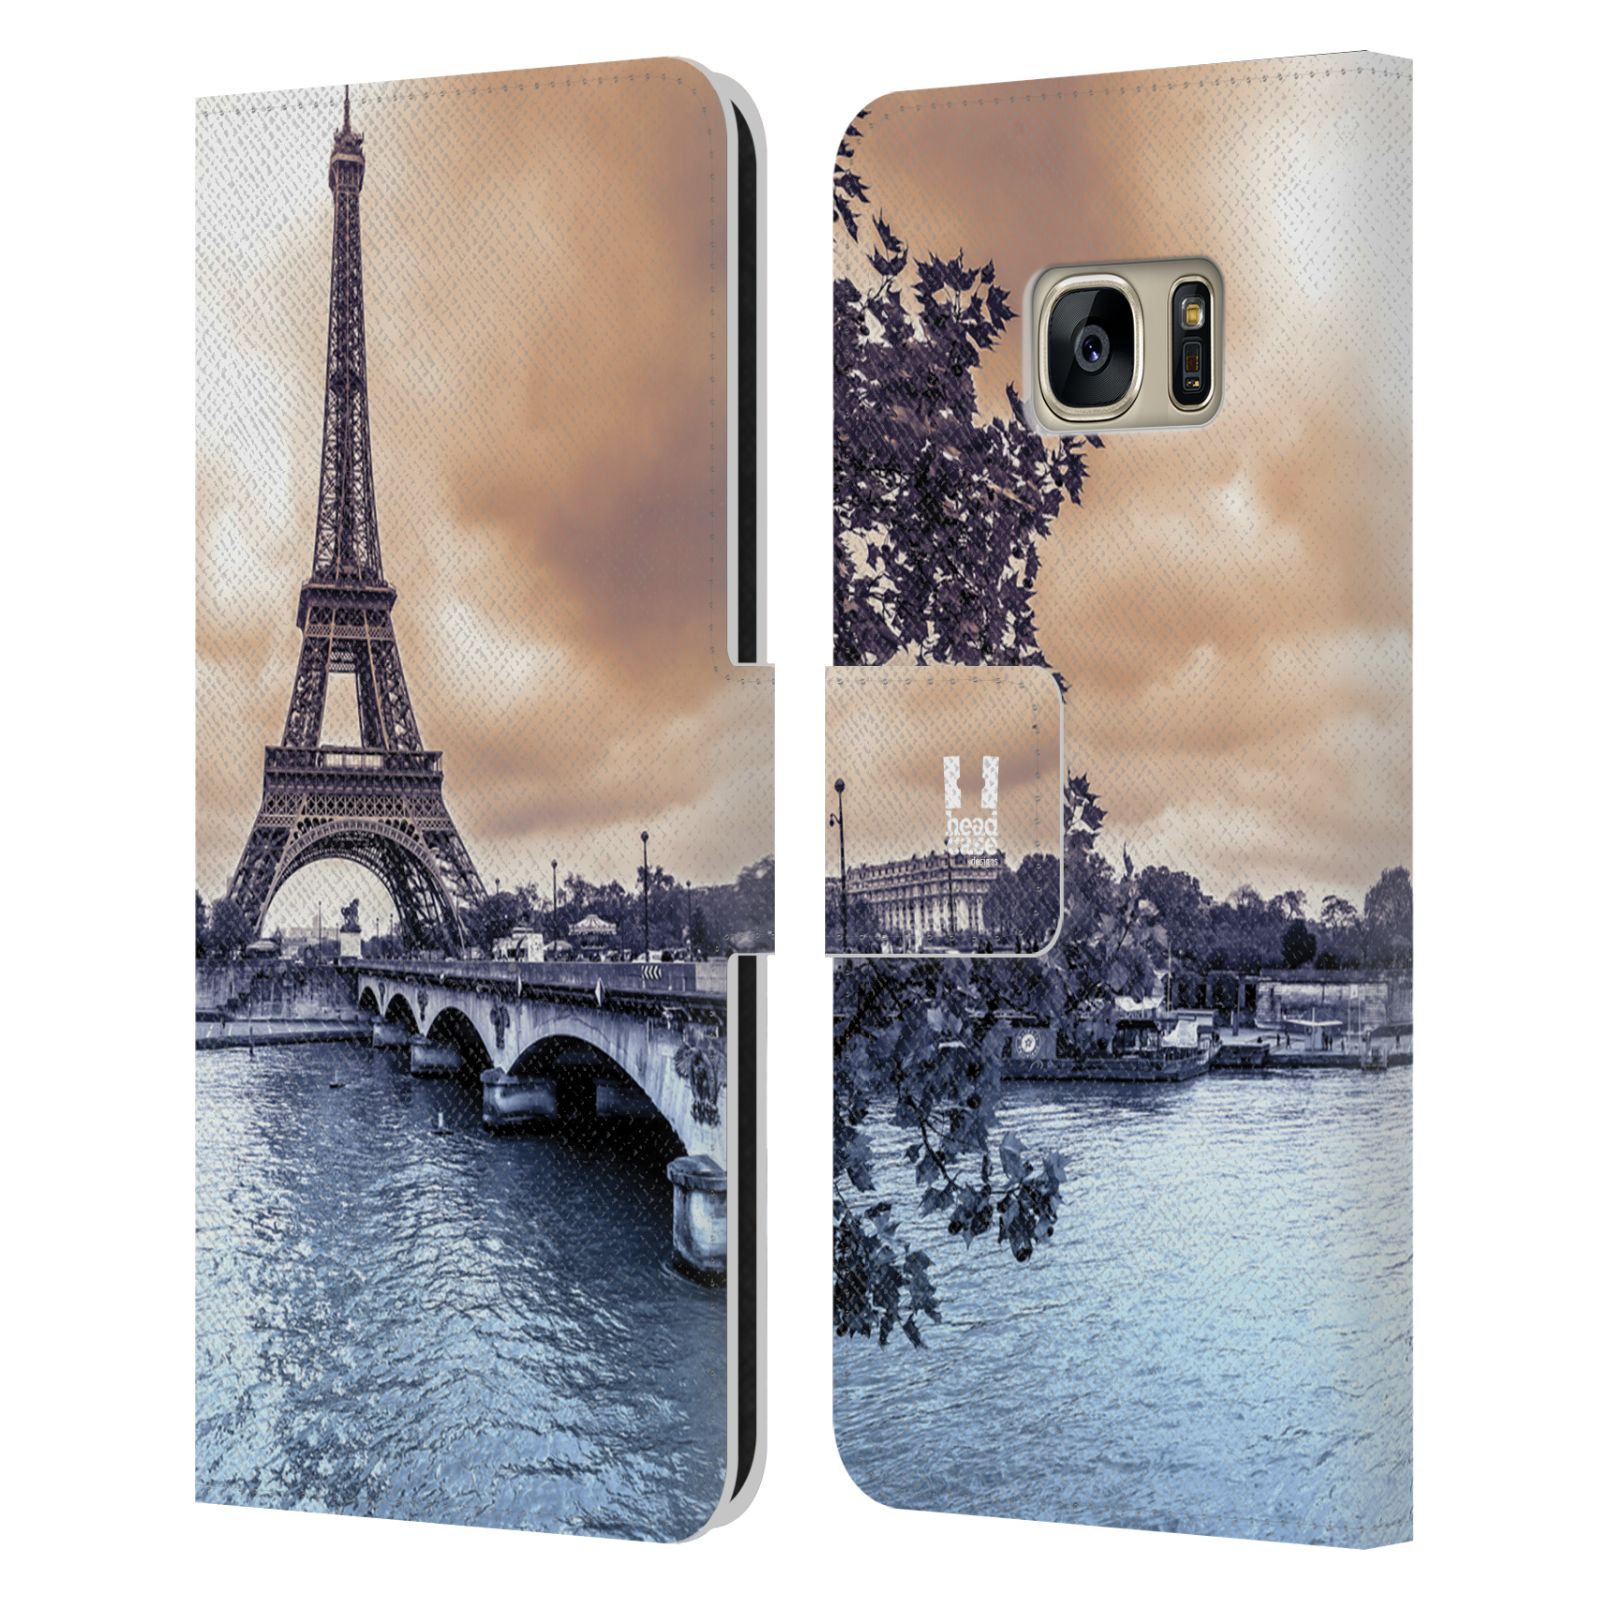 Pouzdro pro mobil Samsung Galaxy S7 - Eiffelova věž Paříž - Francie